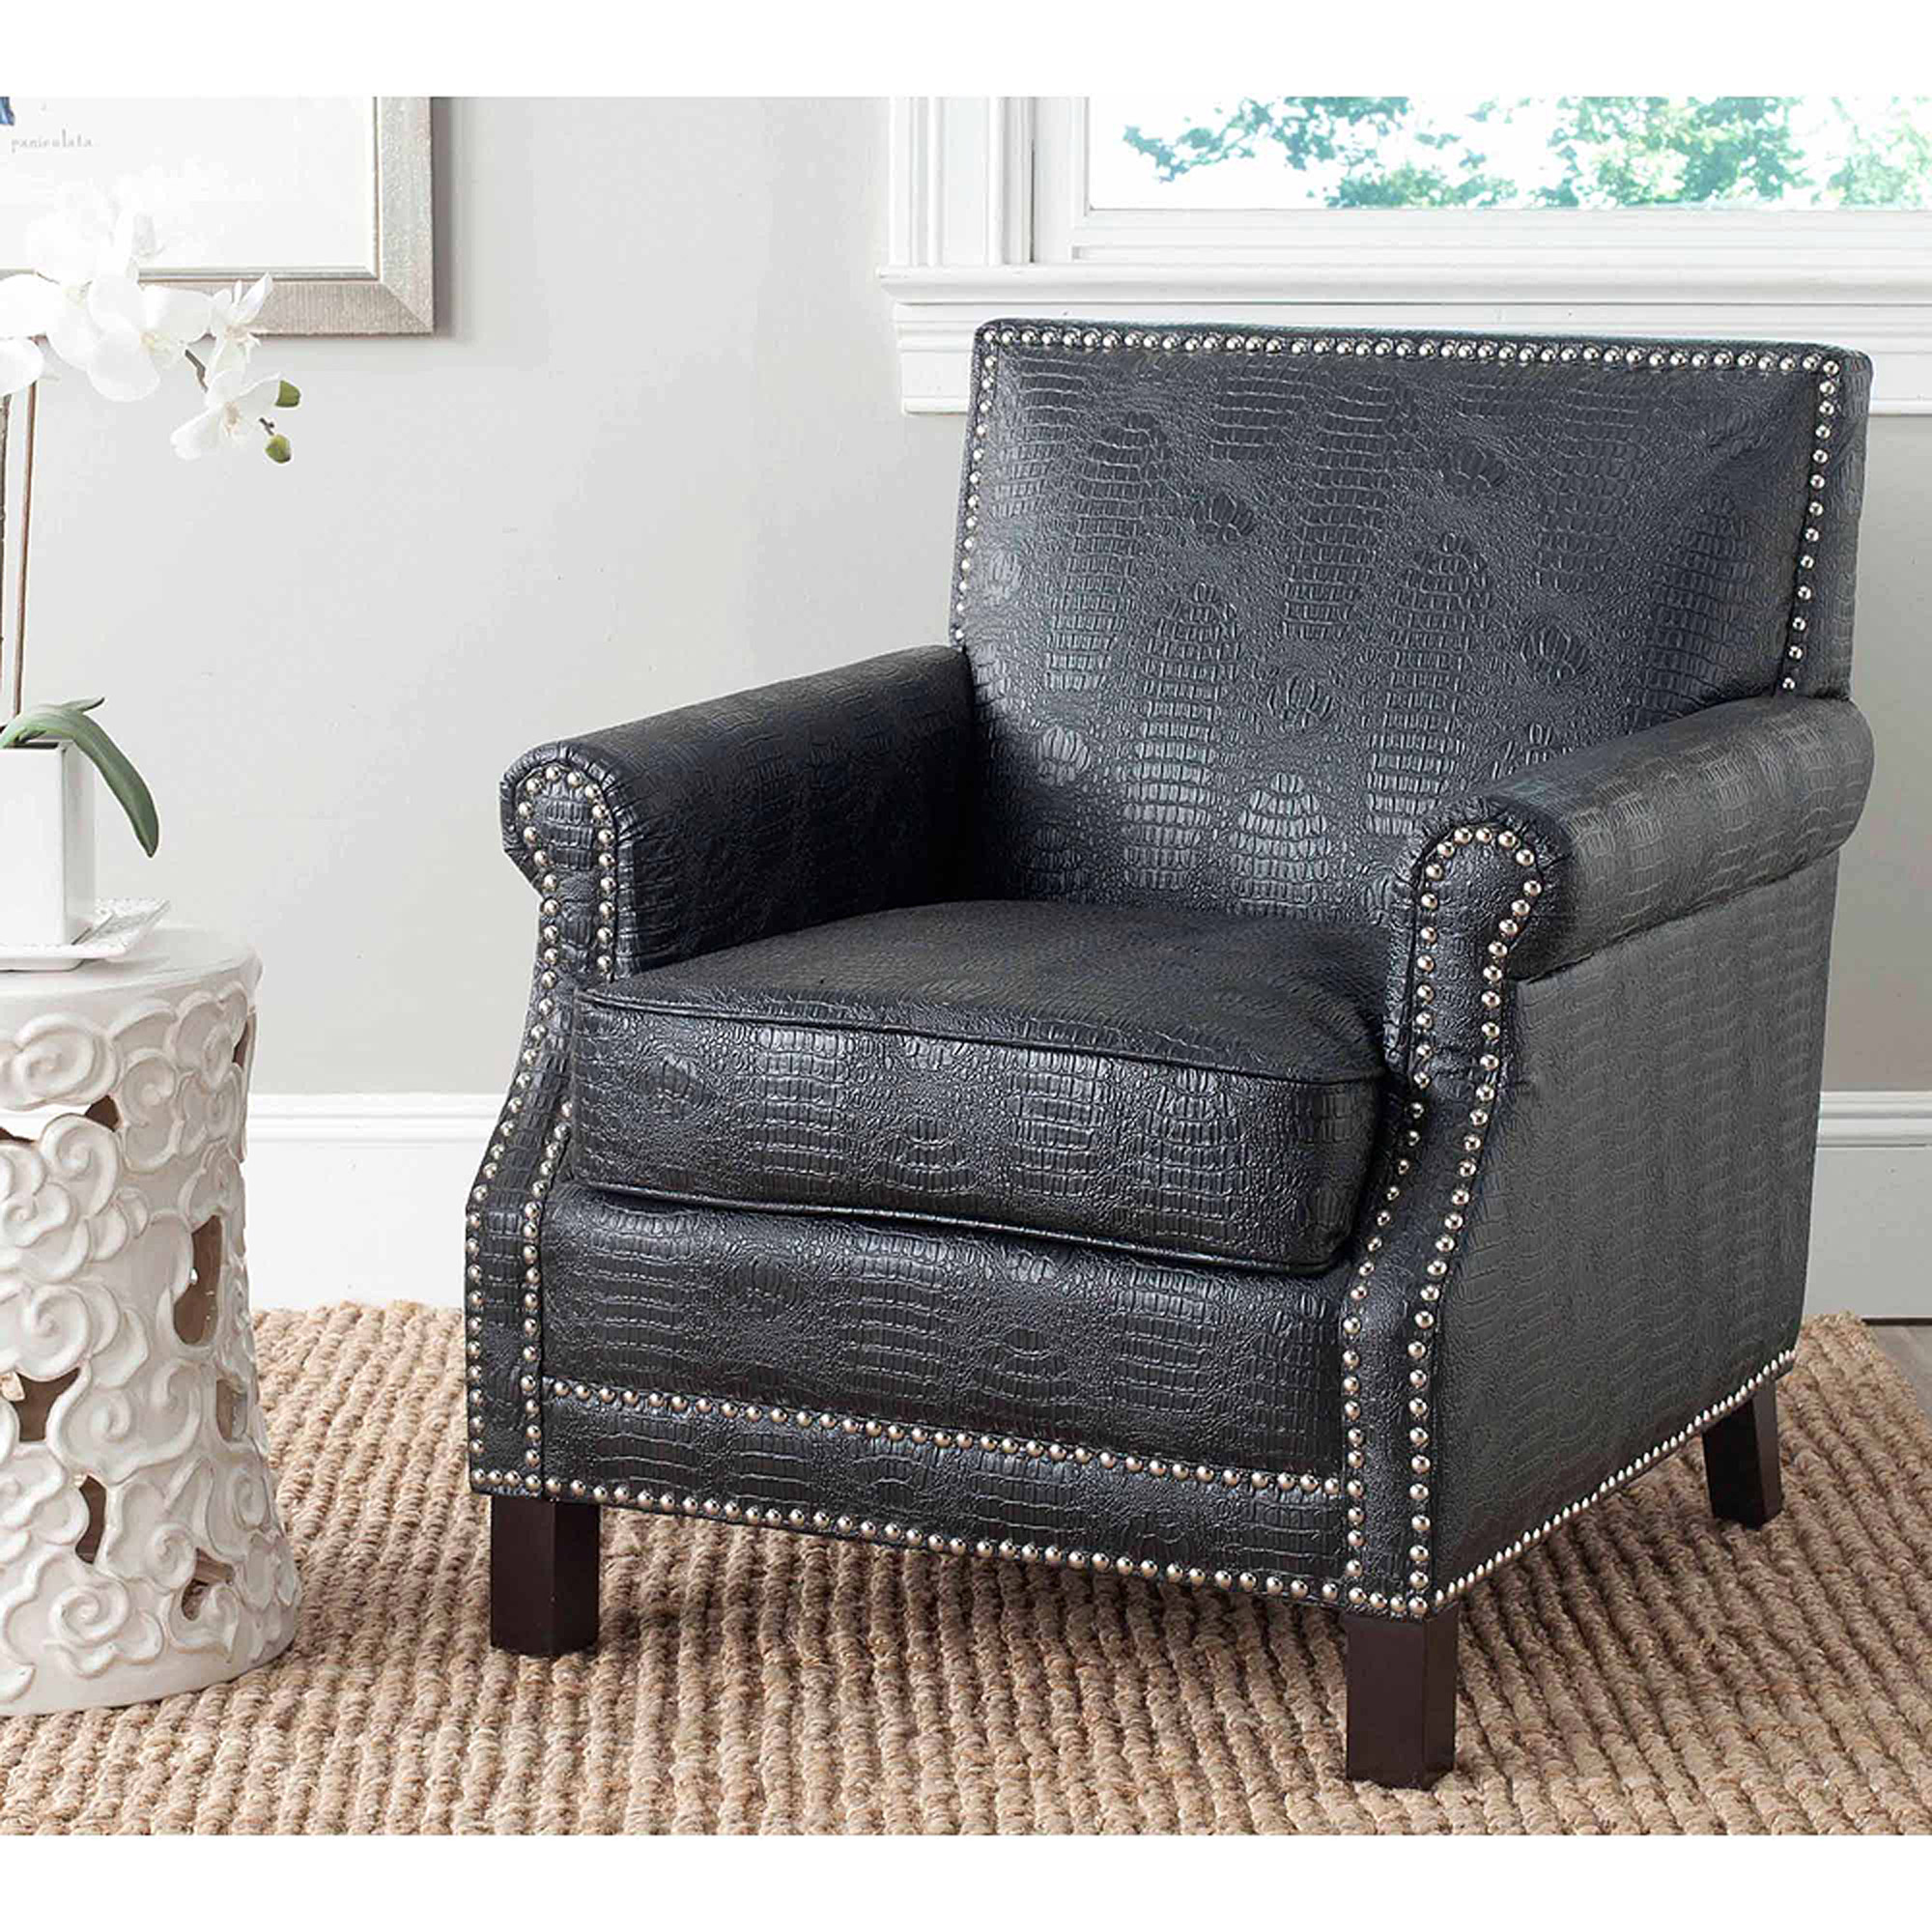 SAFAVIEH Easton Rustic Glam Upholstered Club Chair w/ Nailheads, Black Crocodile - image 1 of 4